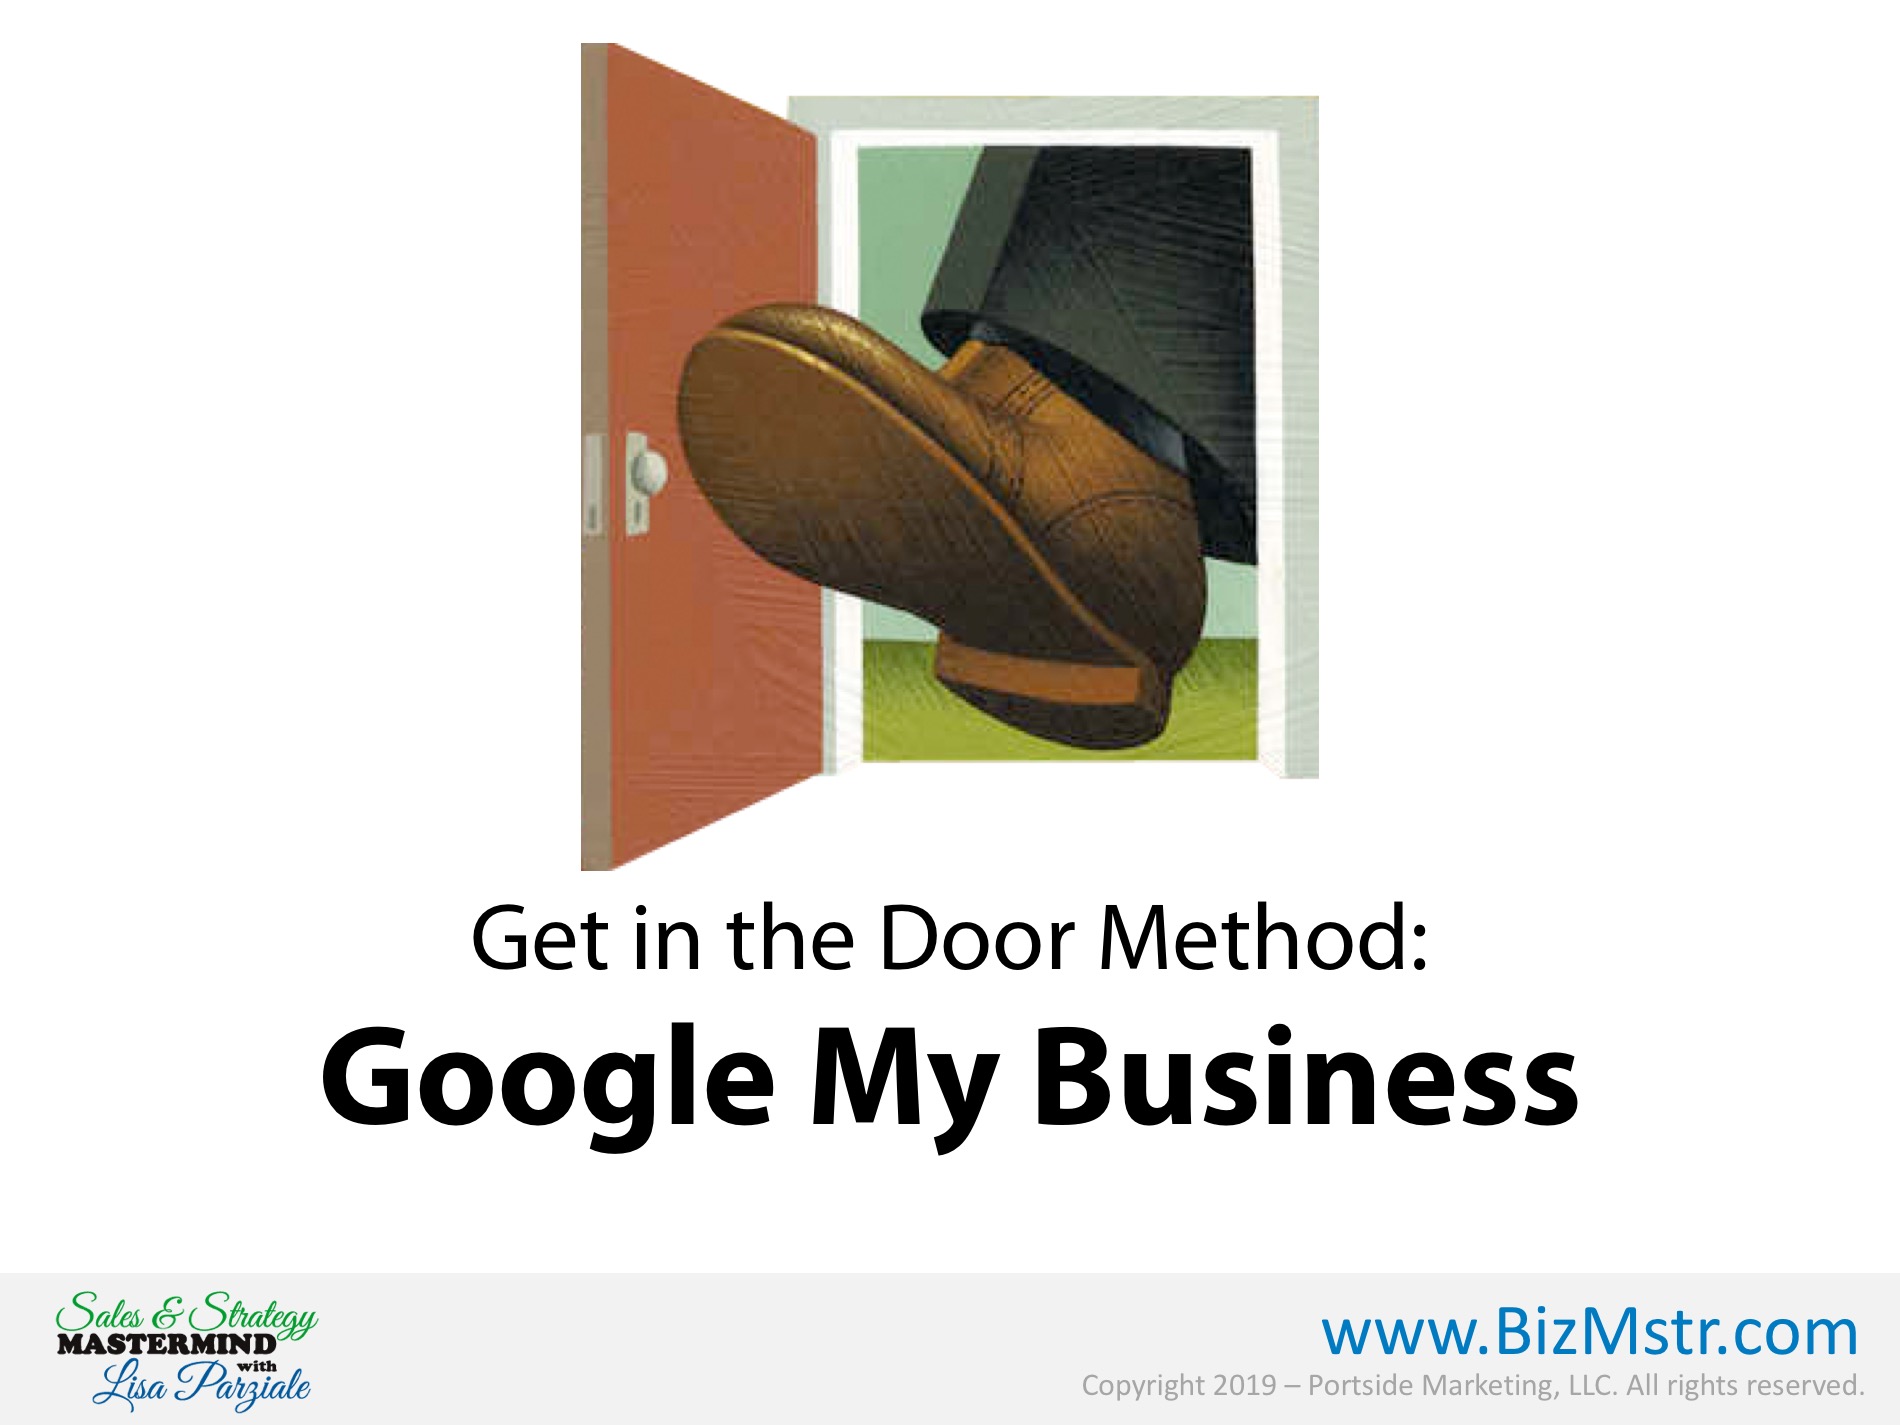 GITD Method for Google My Business (GMB)